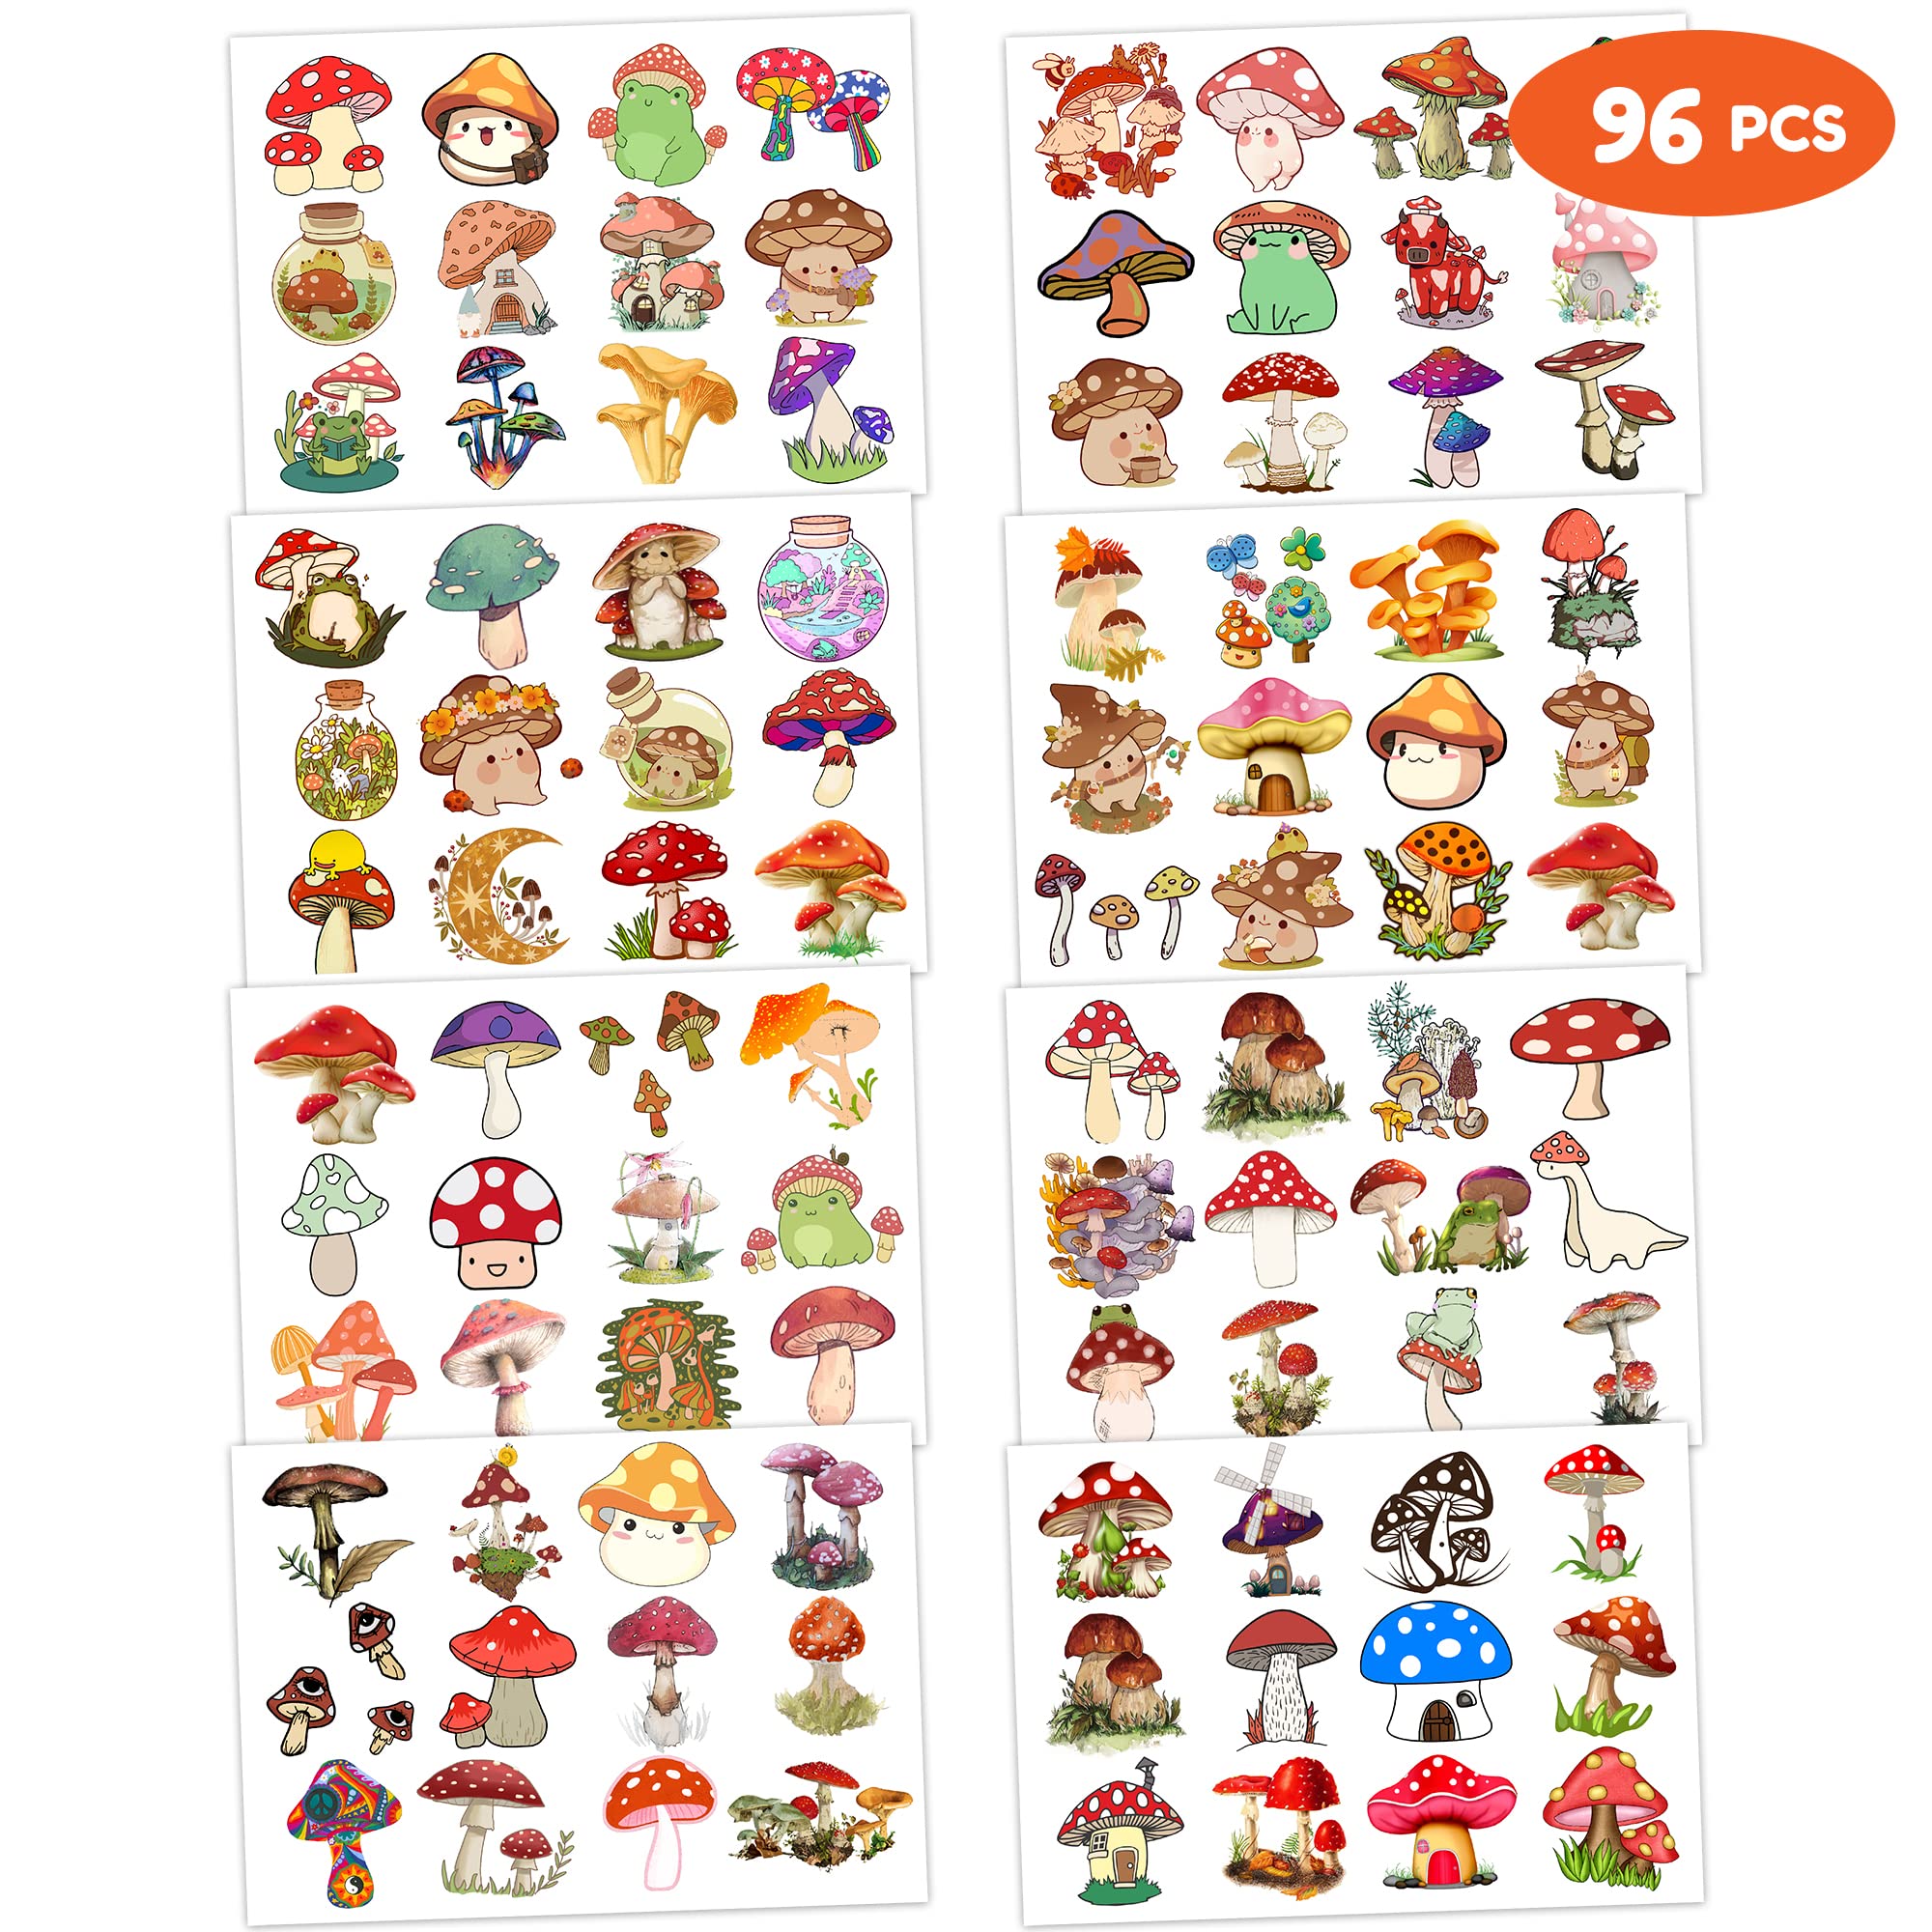 8 Sheet (96Pcs) Mushroom Temporary Tattoos Sticker for Kids, Mushroom Birthday Party Decorations Supplies Favors Super Cute Face Tattoos Sticker Gifts Ideas for Boys Girls Baby Shower Prizes Rewards